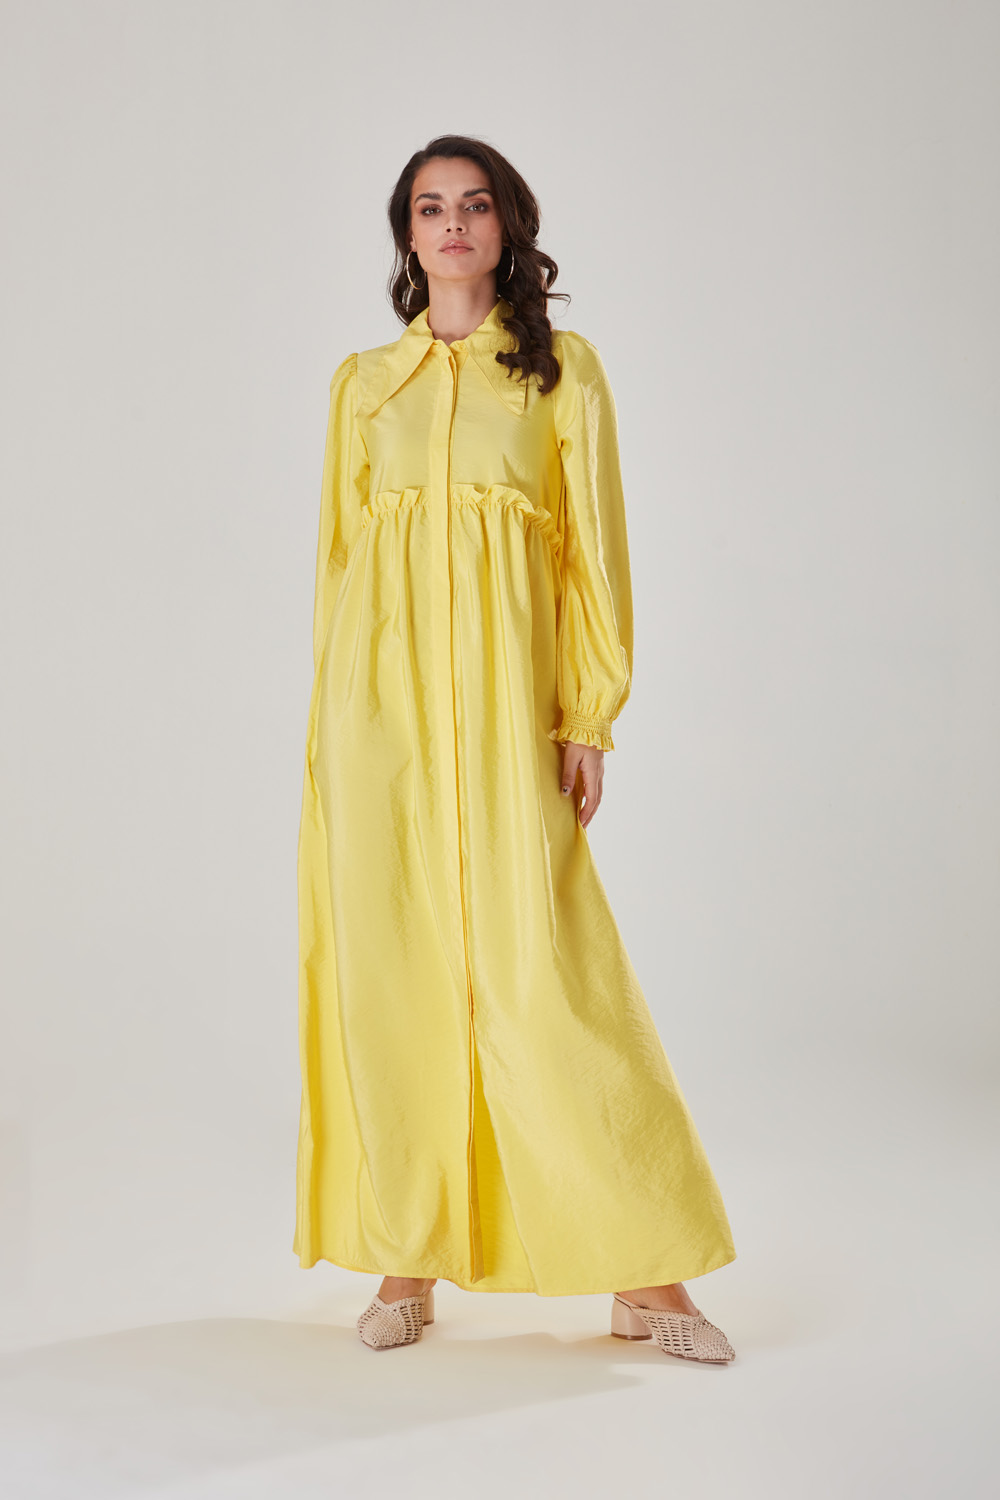 Collar Detailed Designed Yellow Dress